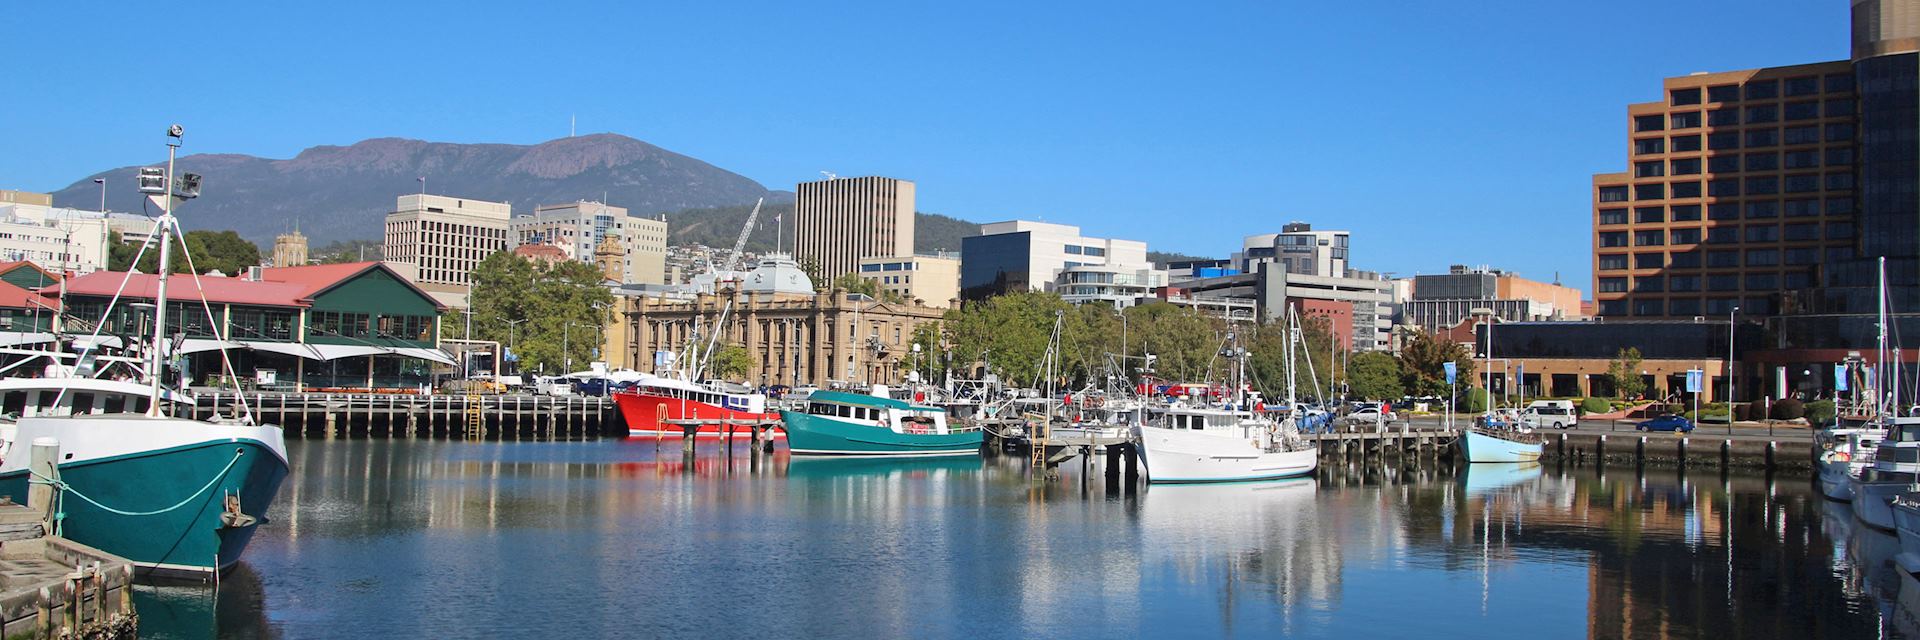 Hobart Waterfront, Tasmania